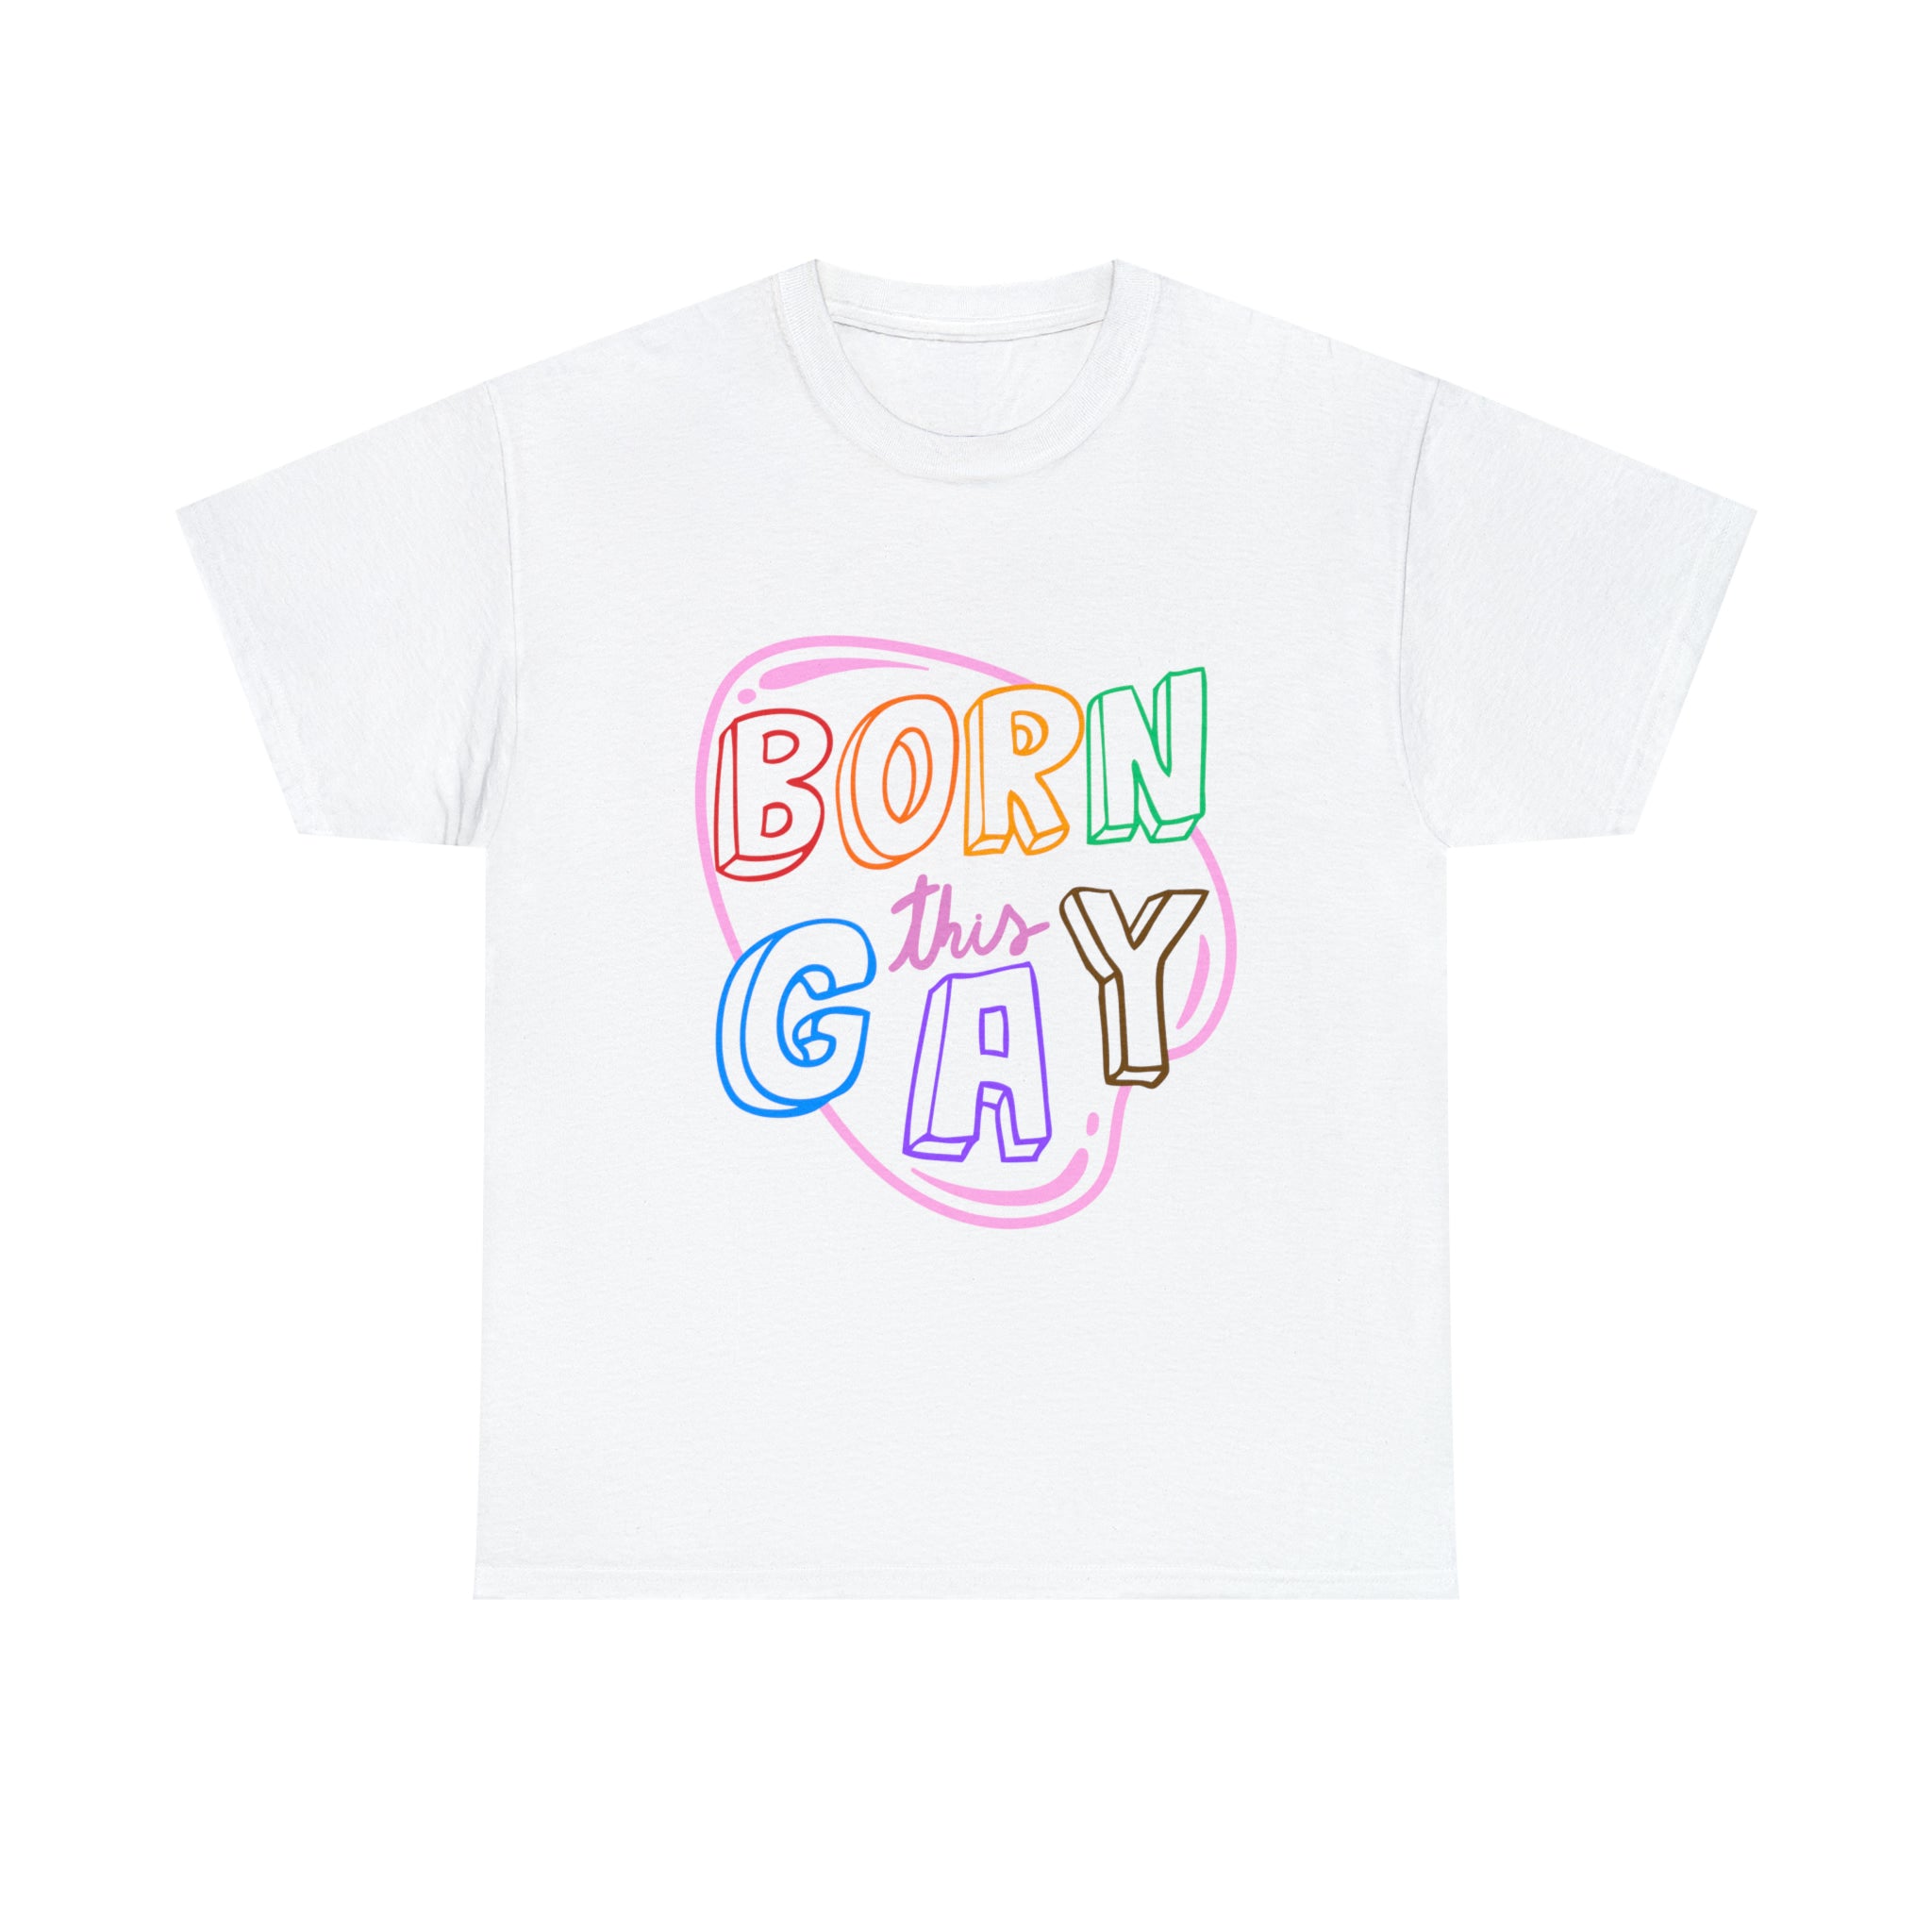 A white t-shirt that says Born This Gay T-Shirt pride.